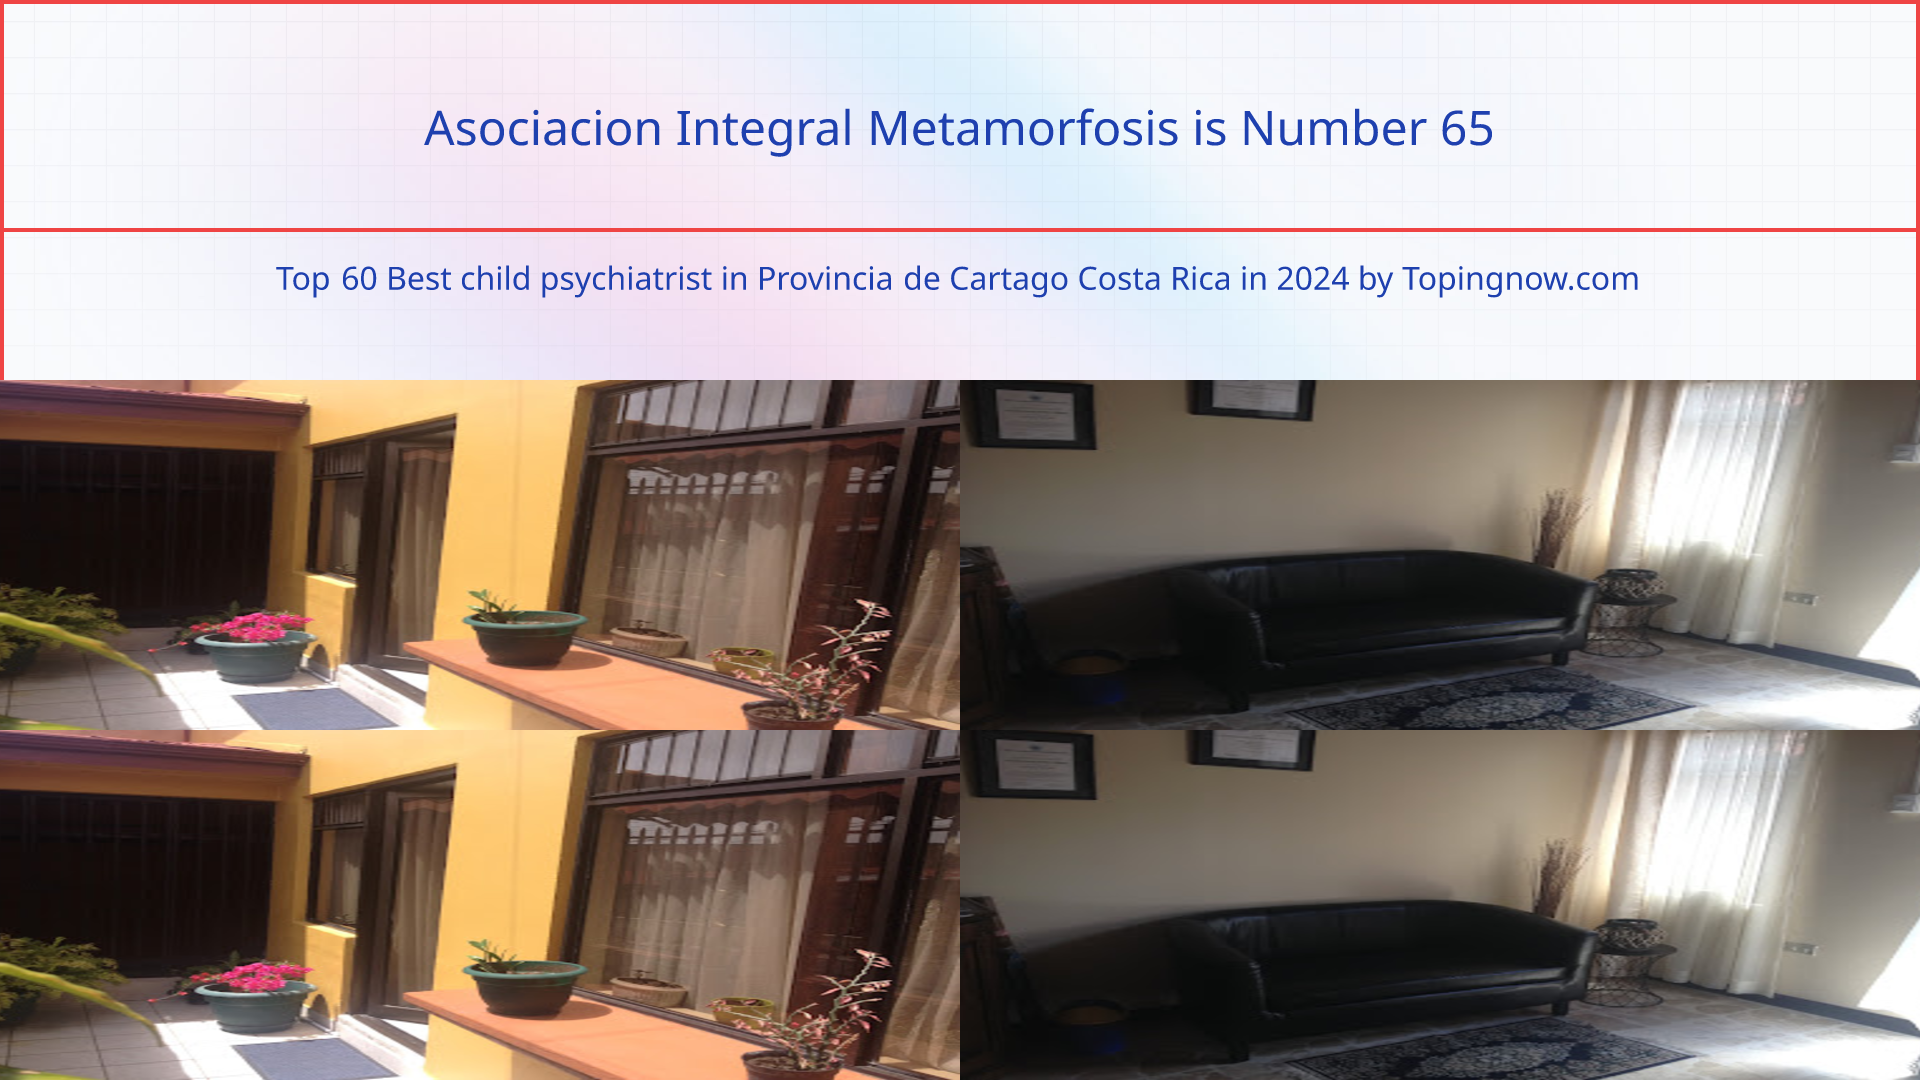 Asociacion Integral Metamorfosis: Top 60 Best child psychiatrist in Provincia de Cartago Costa Rica in 2024